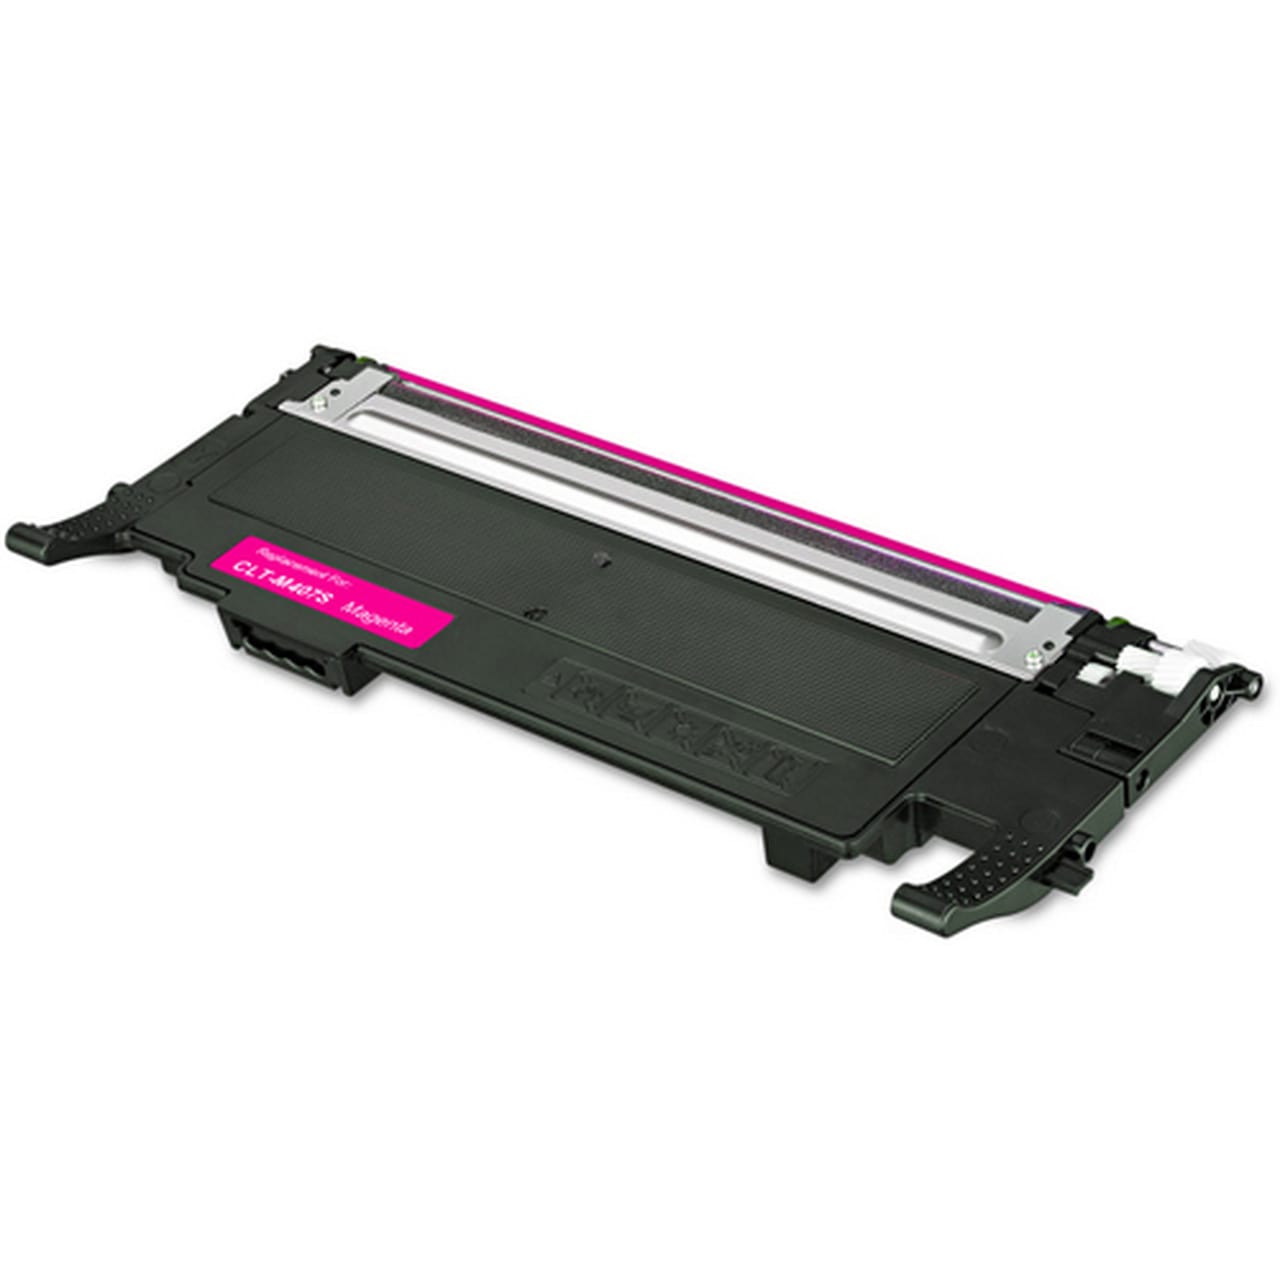 Samsung CLP-326 Color Laser Printer series